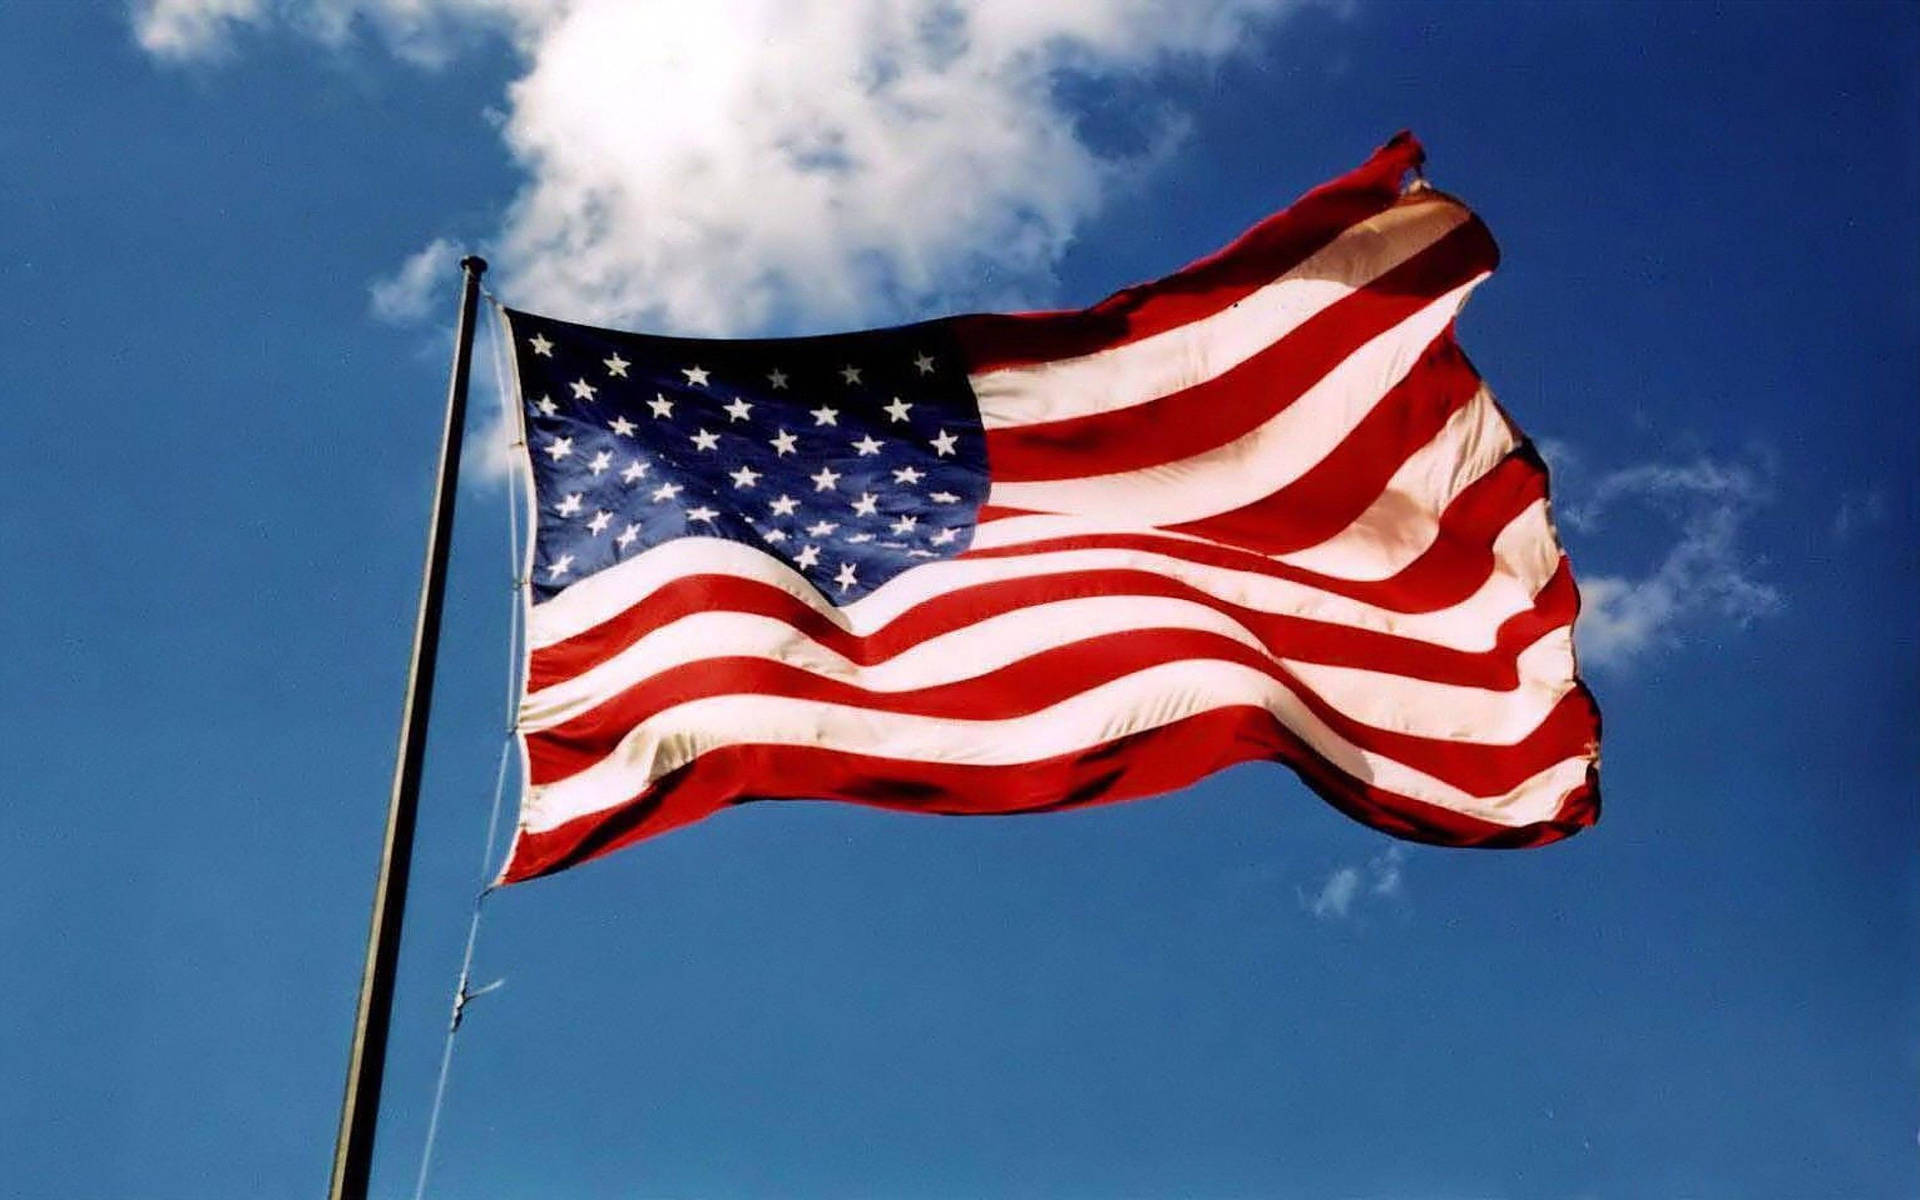 Free American Flag Wallpaper Downloads, American Flag Wallpaper for FREE